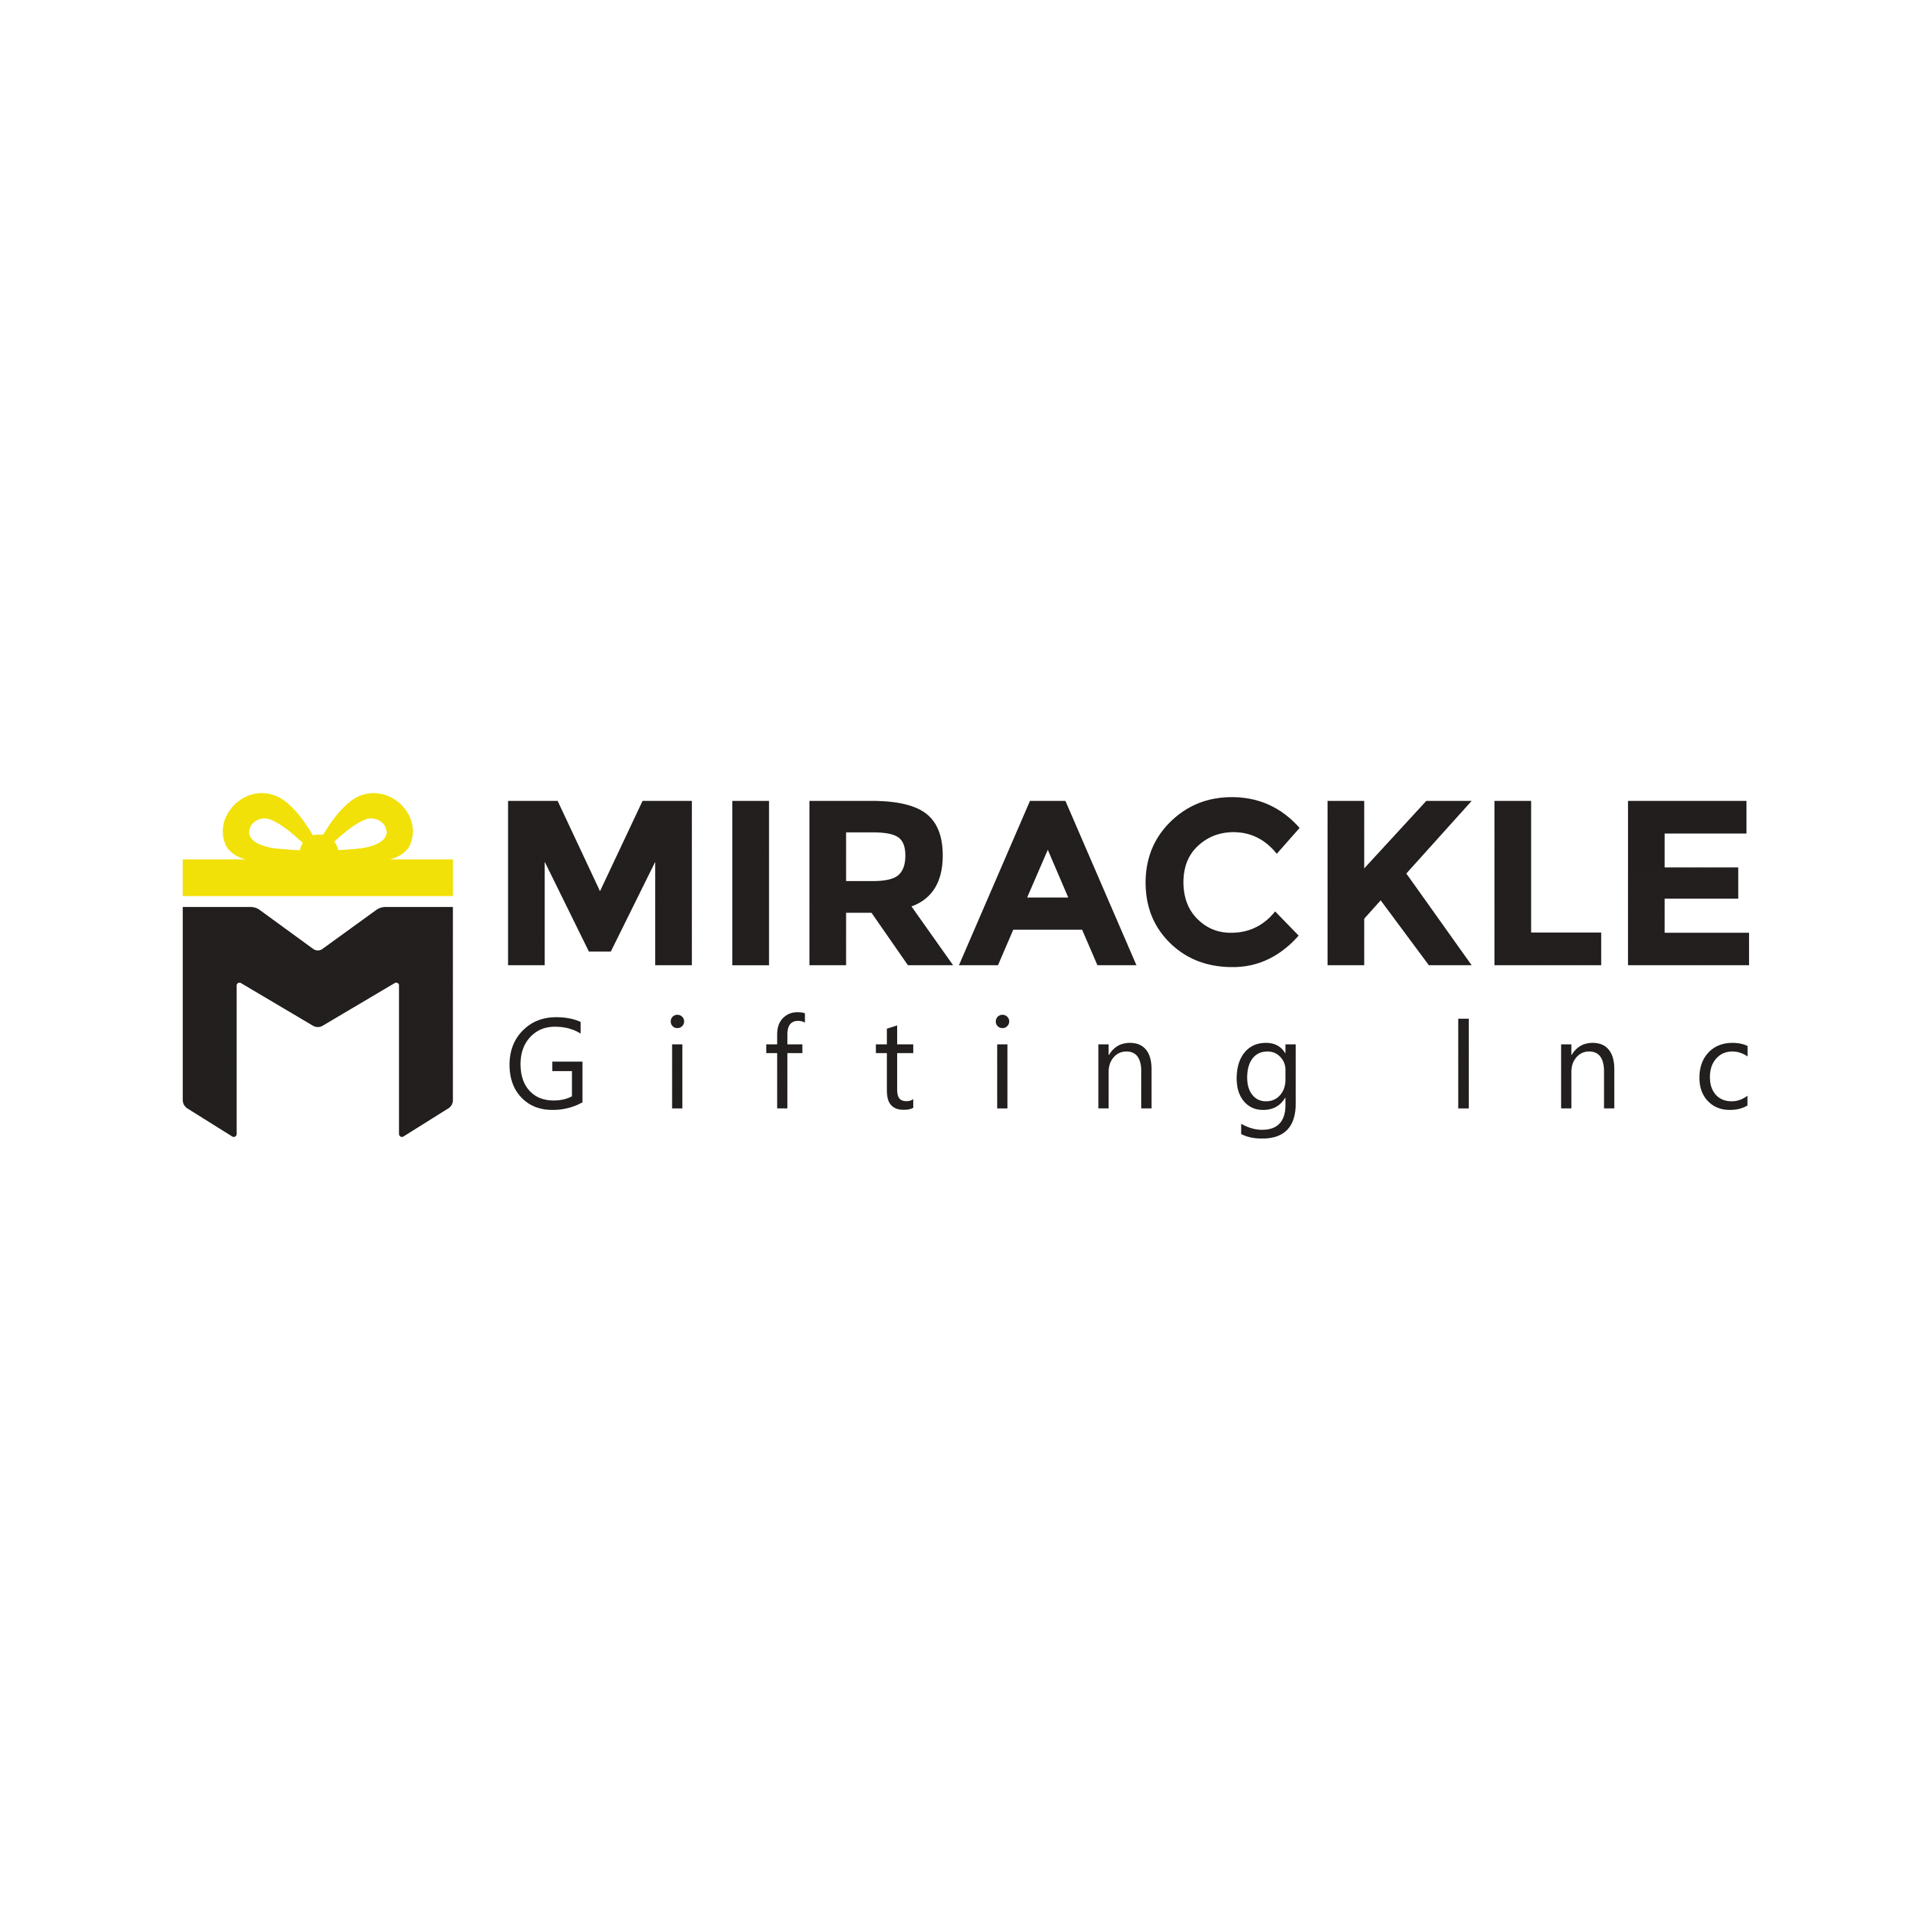 Mirackle Gifting inc